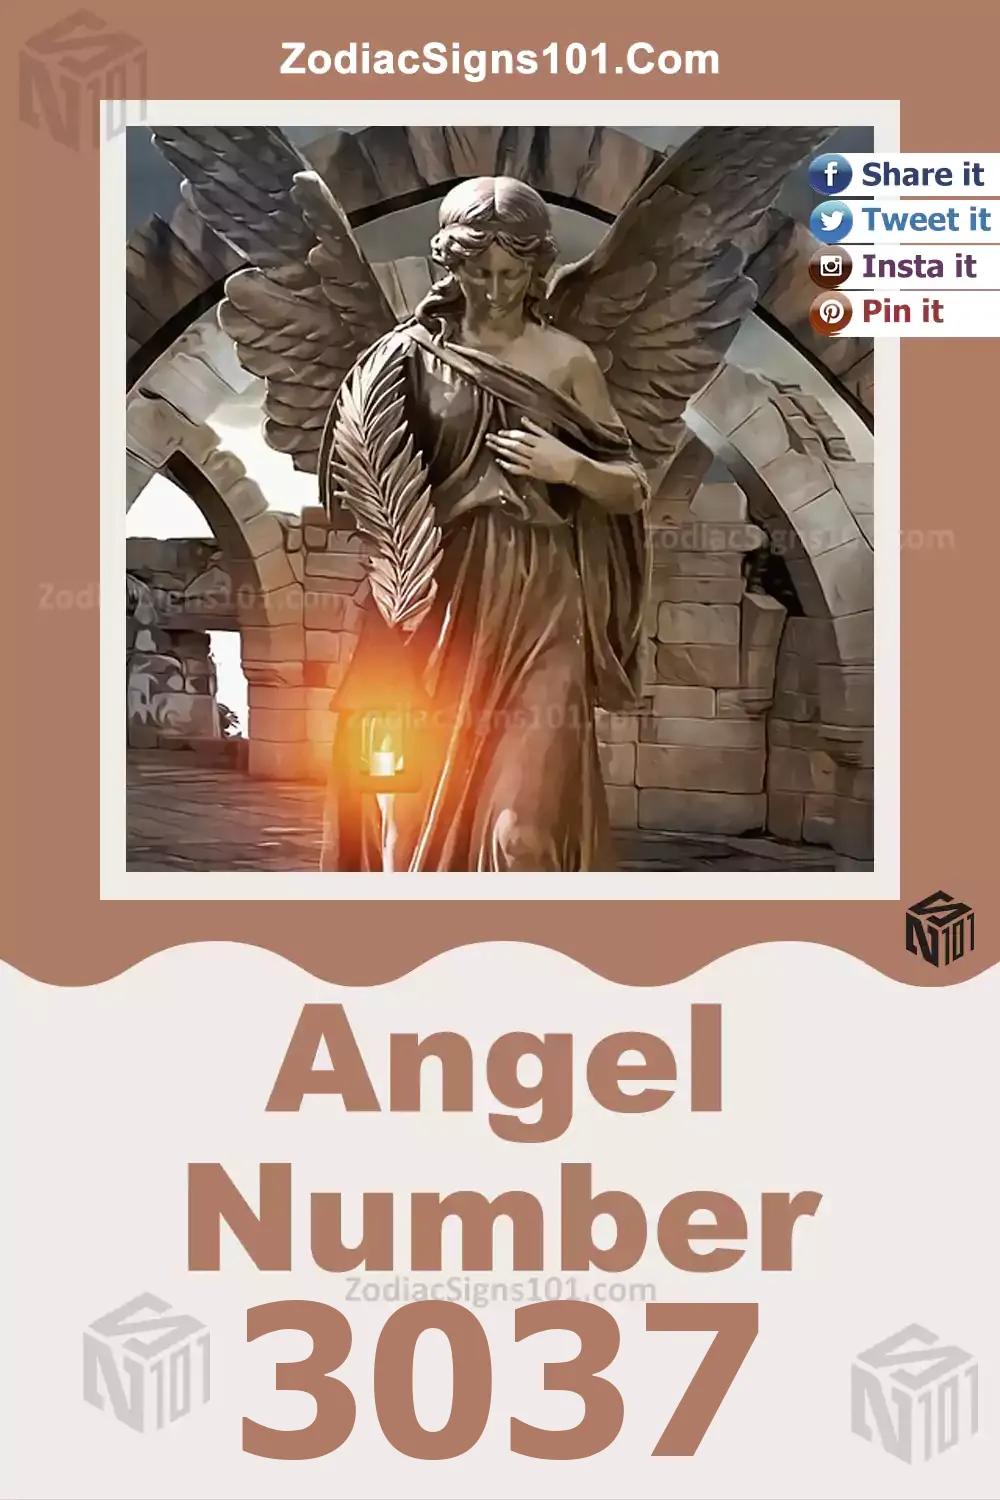 3037-Angel-Number-Meaning.jpg